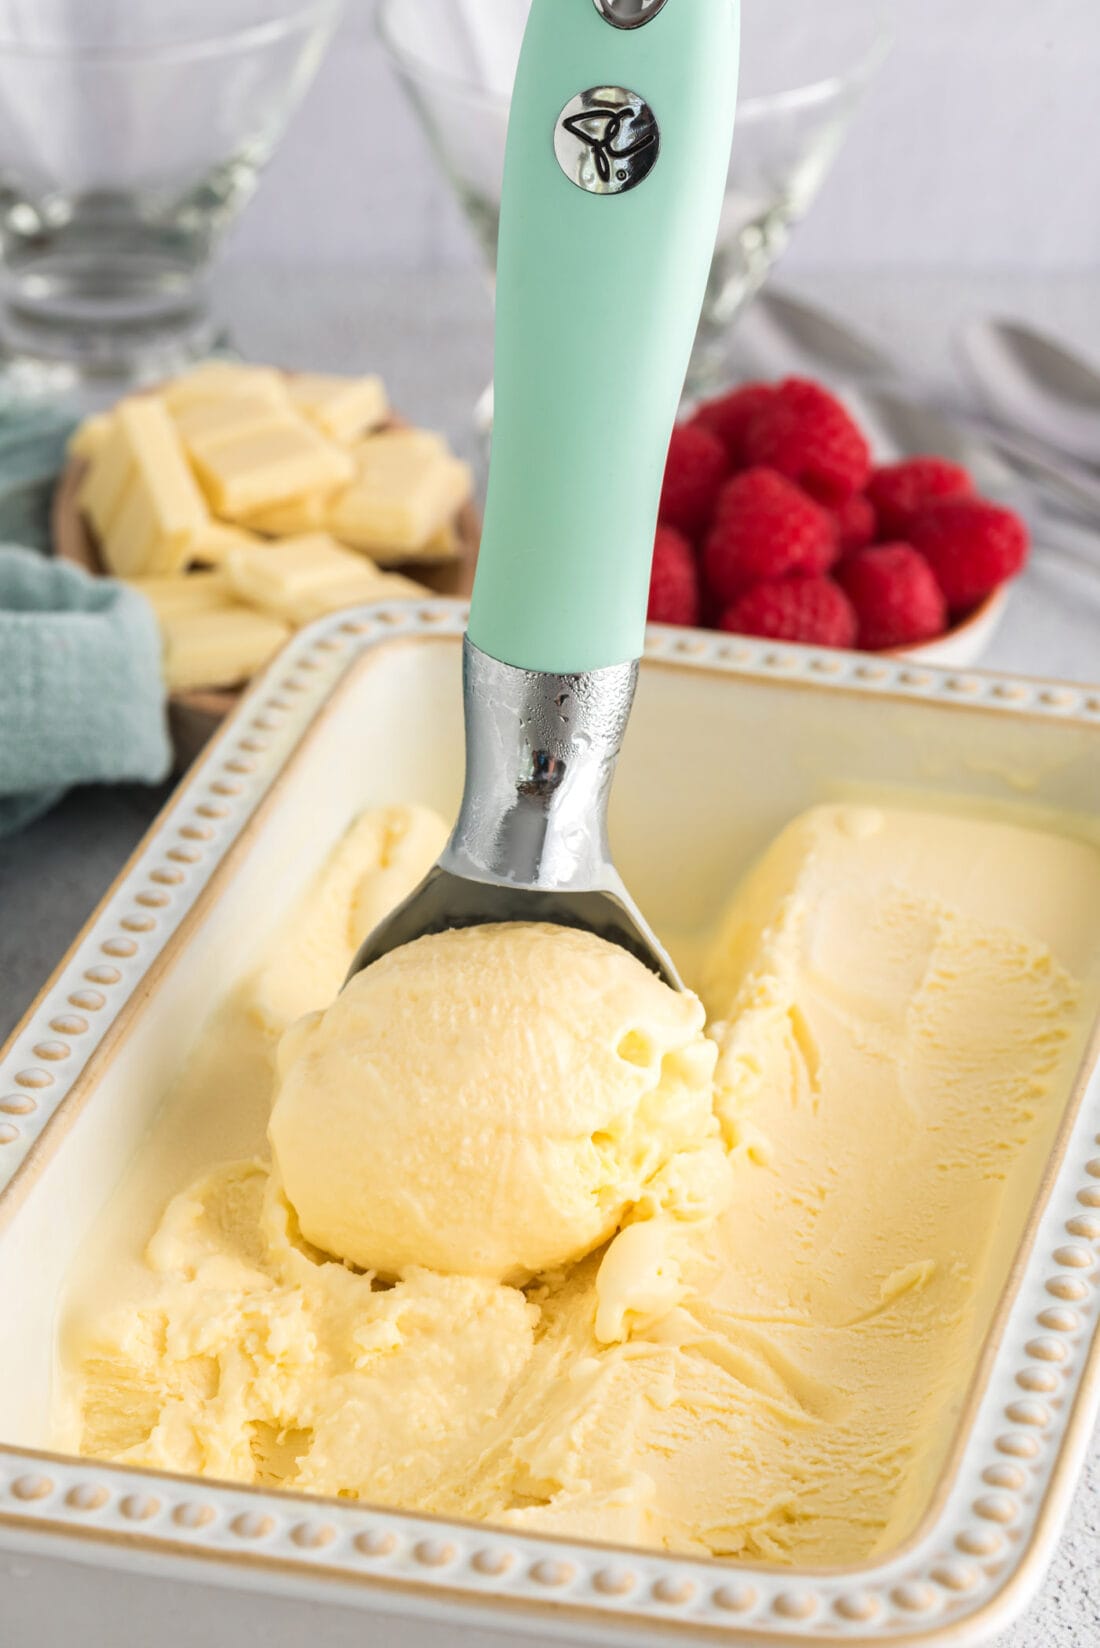 Ice cream scooper with a scoop of White Chocolate Ice Cream in a pan of White Chocolate Ice Cream